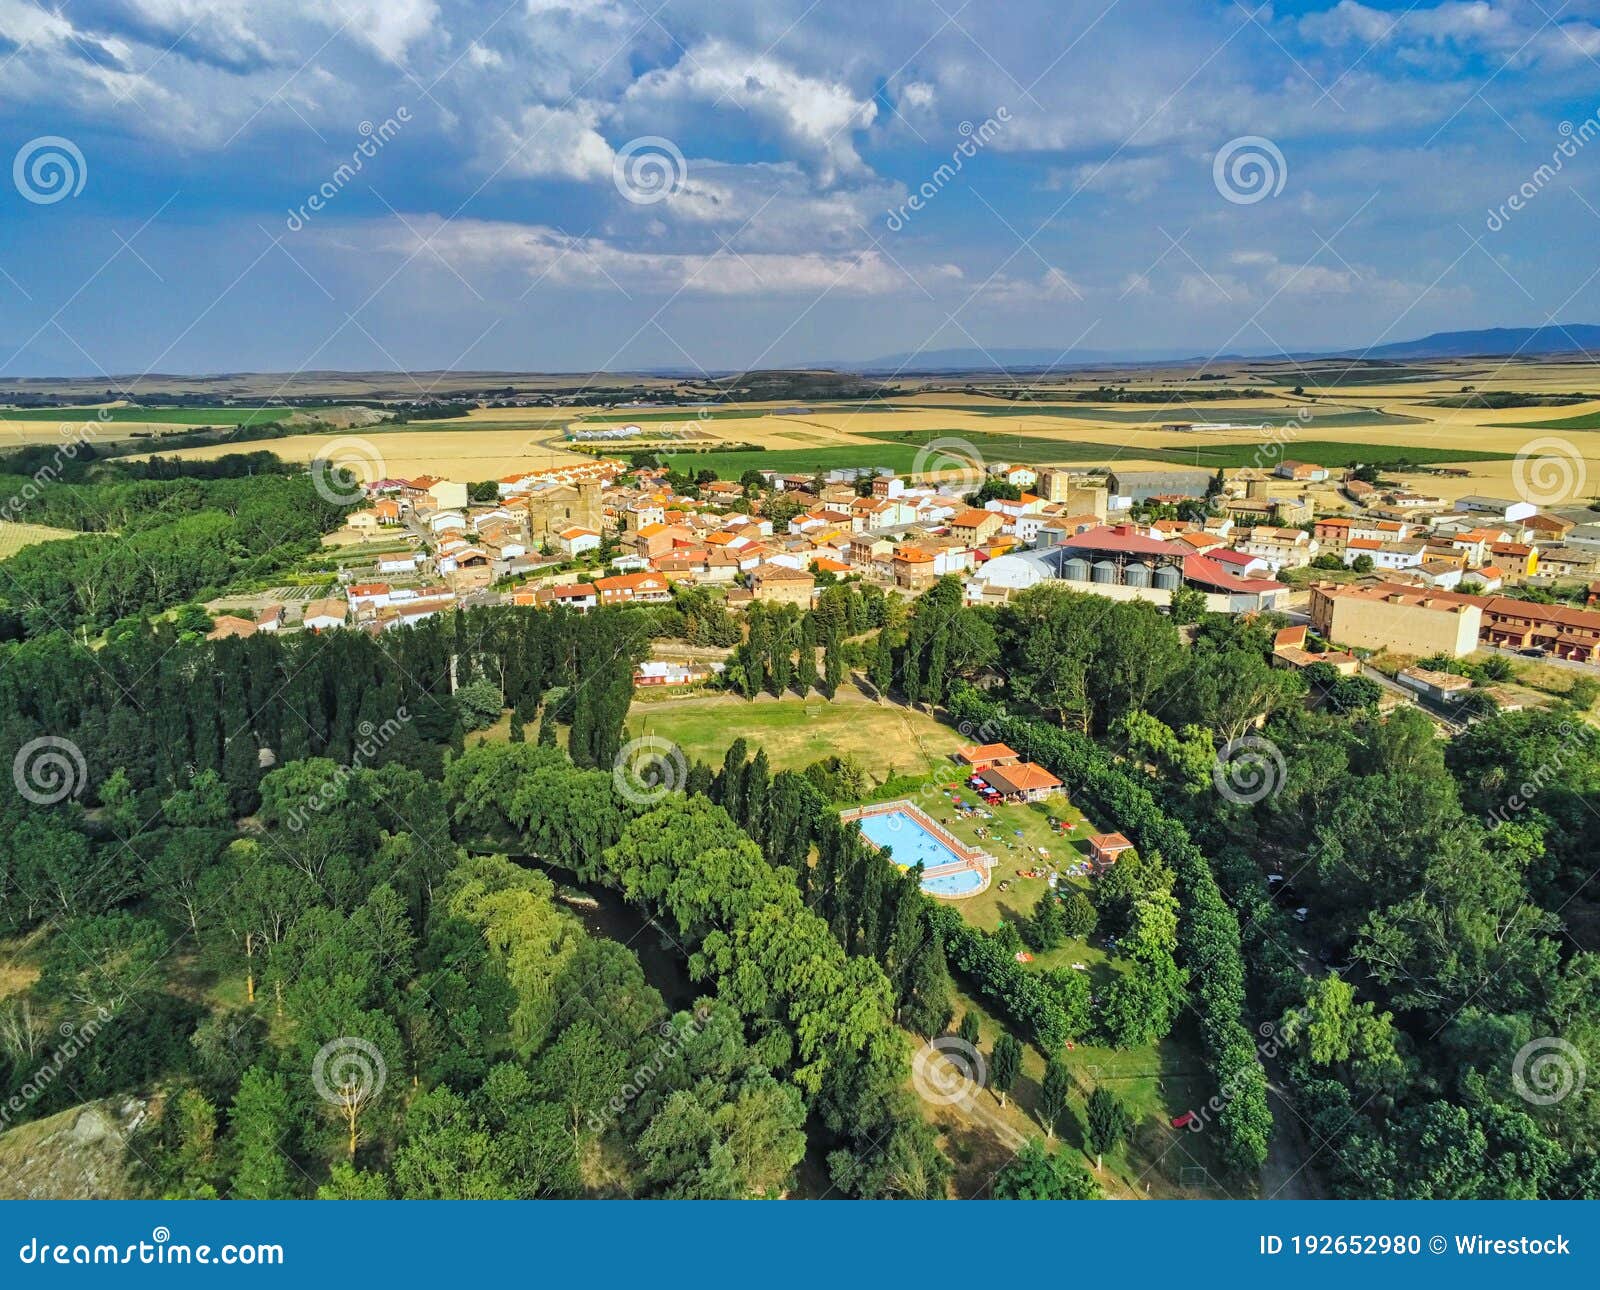 aerial view in village of la rioja near of logrono,spain. drone photo